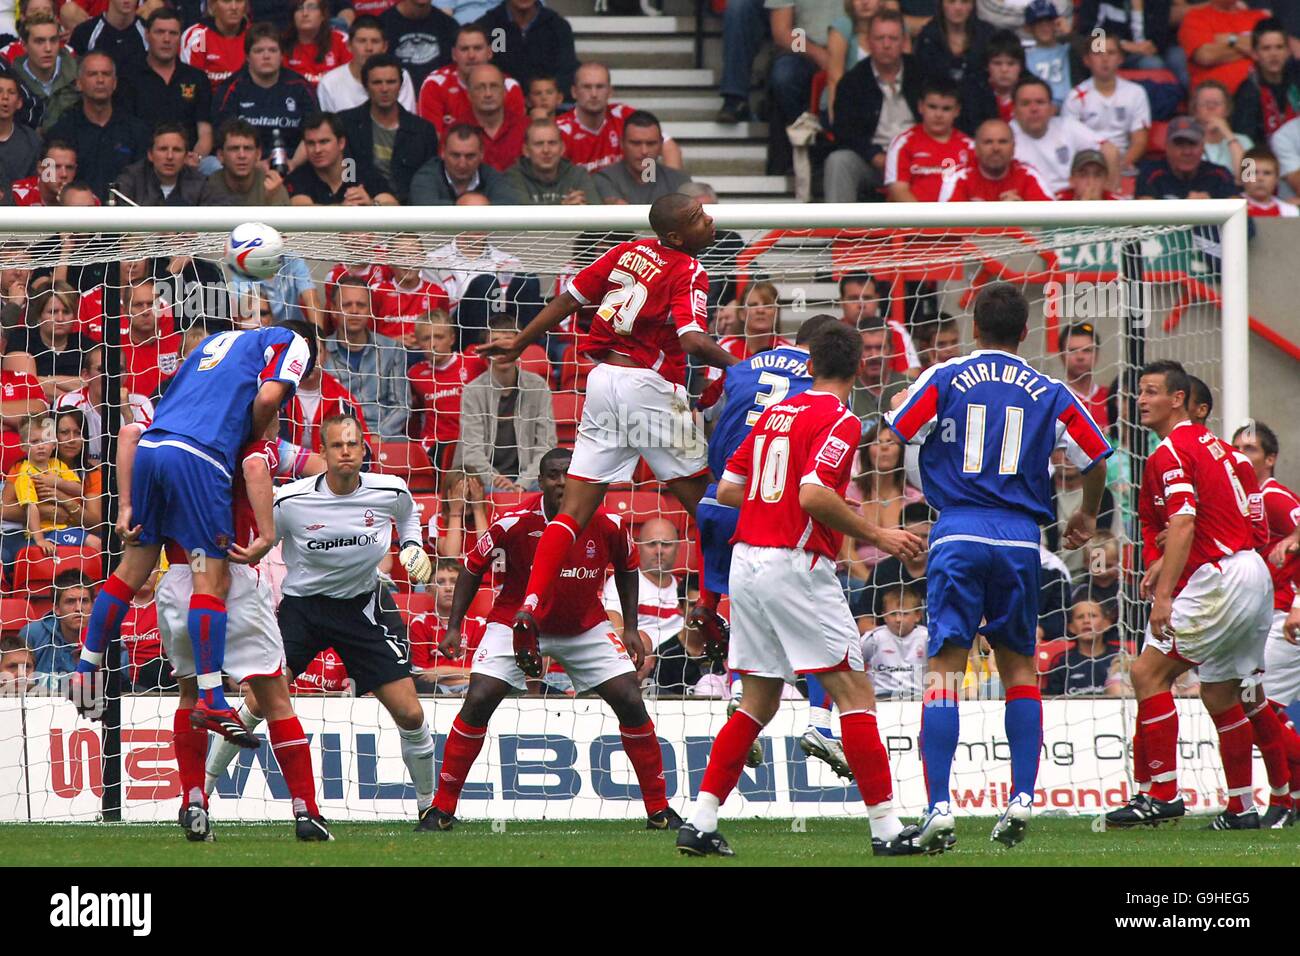 Soccer - League One match - Nottingham Forest v Carlisle - City Ground Stock Photo